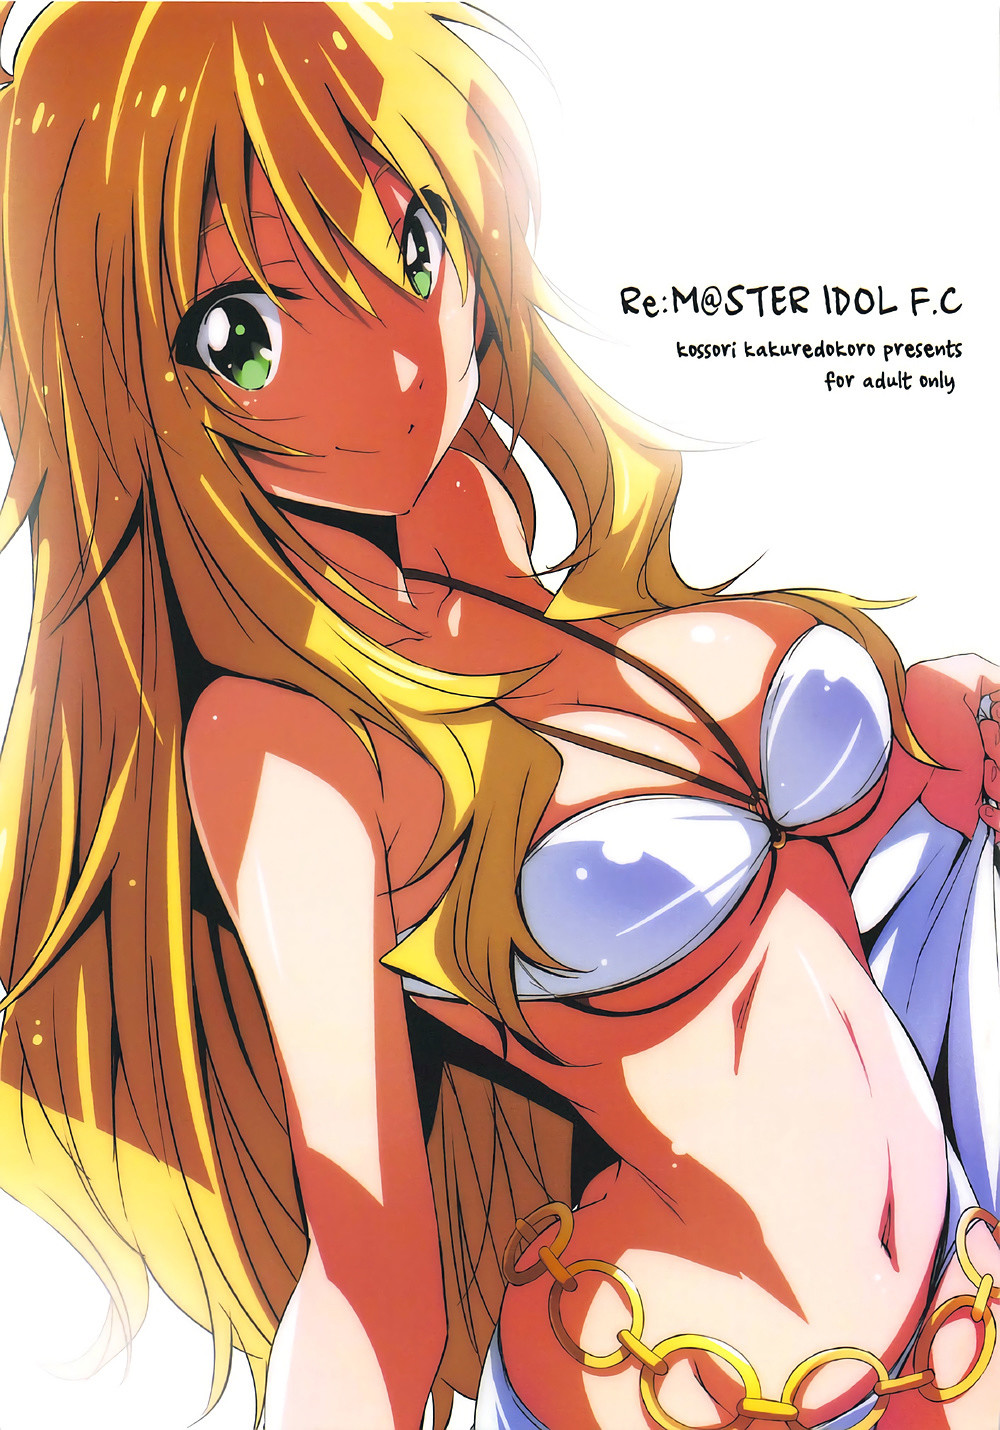 Hentai Manga Comic-Re:M@STER IDOL F.C-Read-1